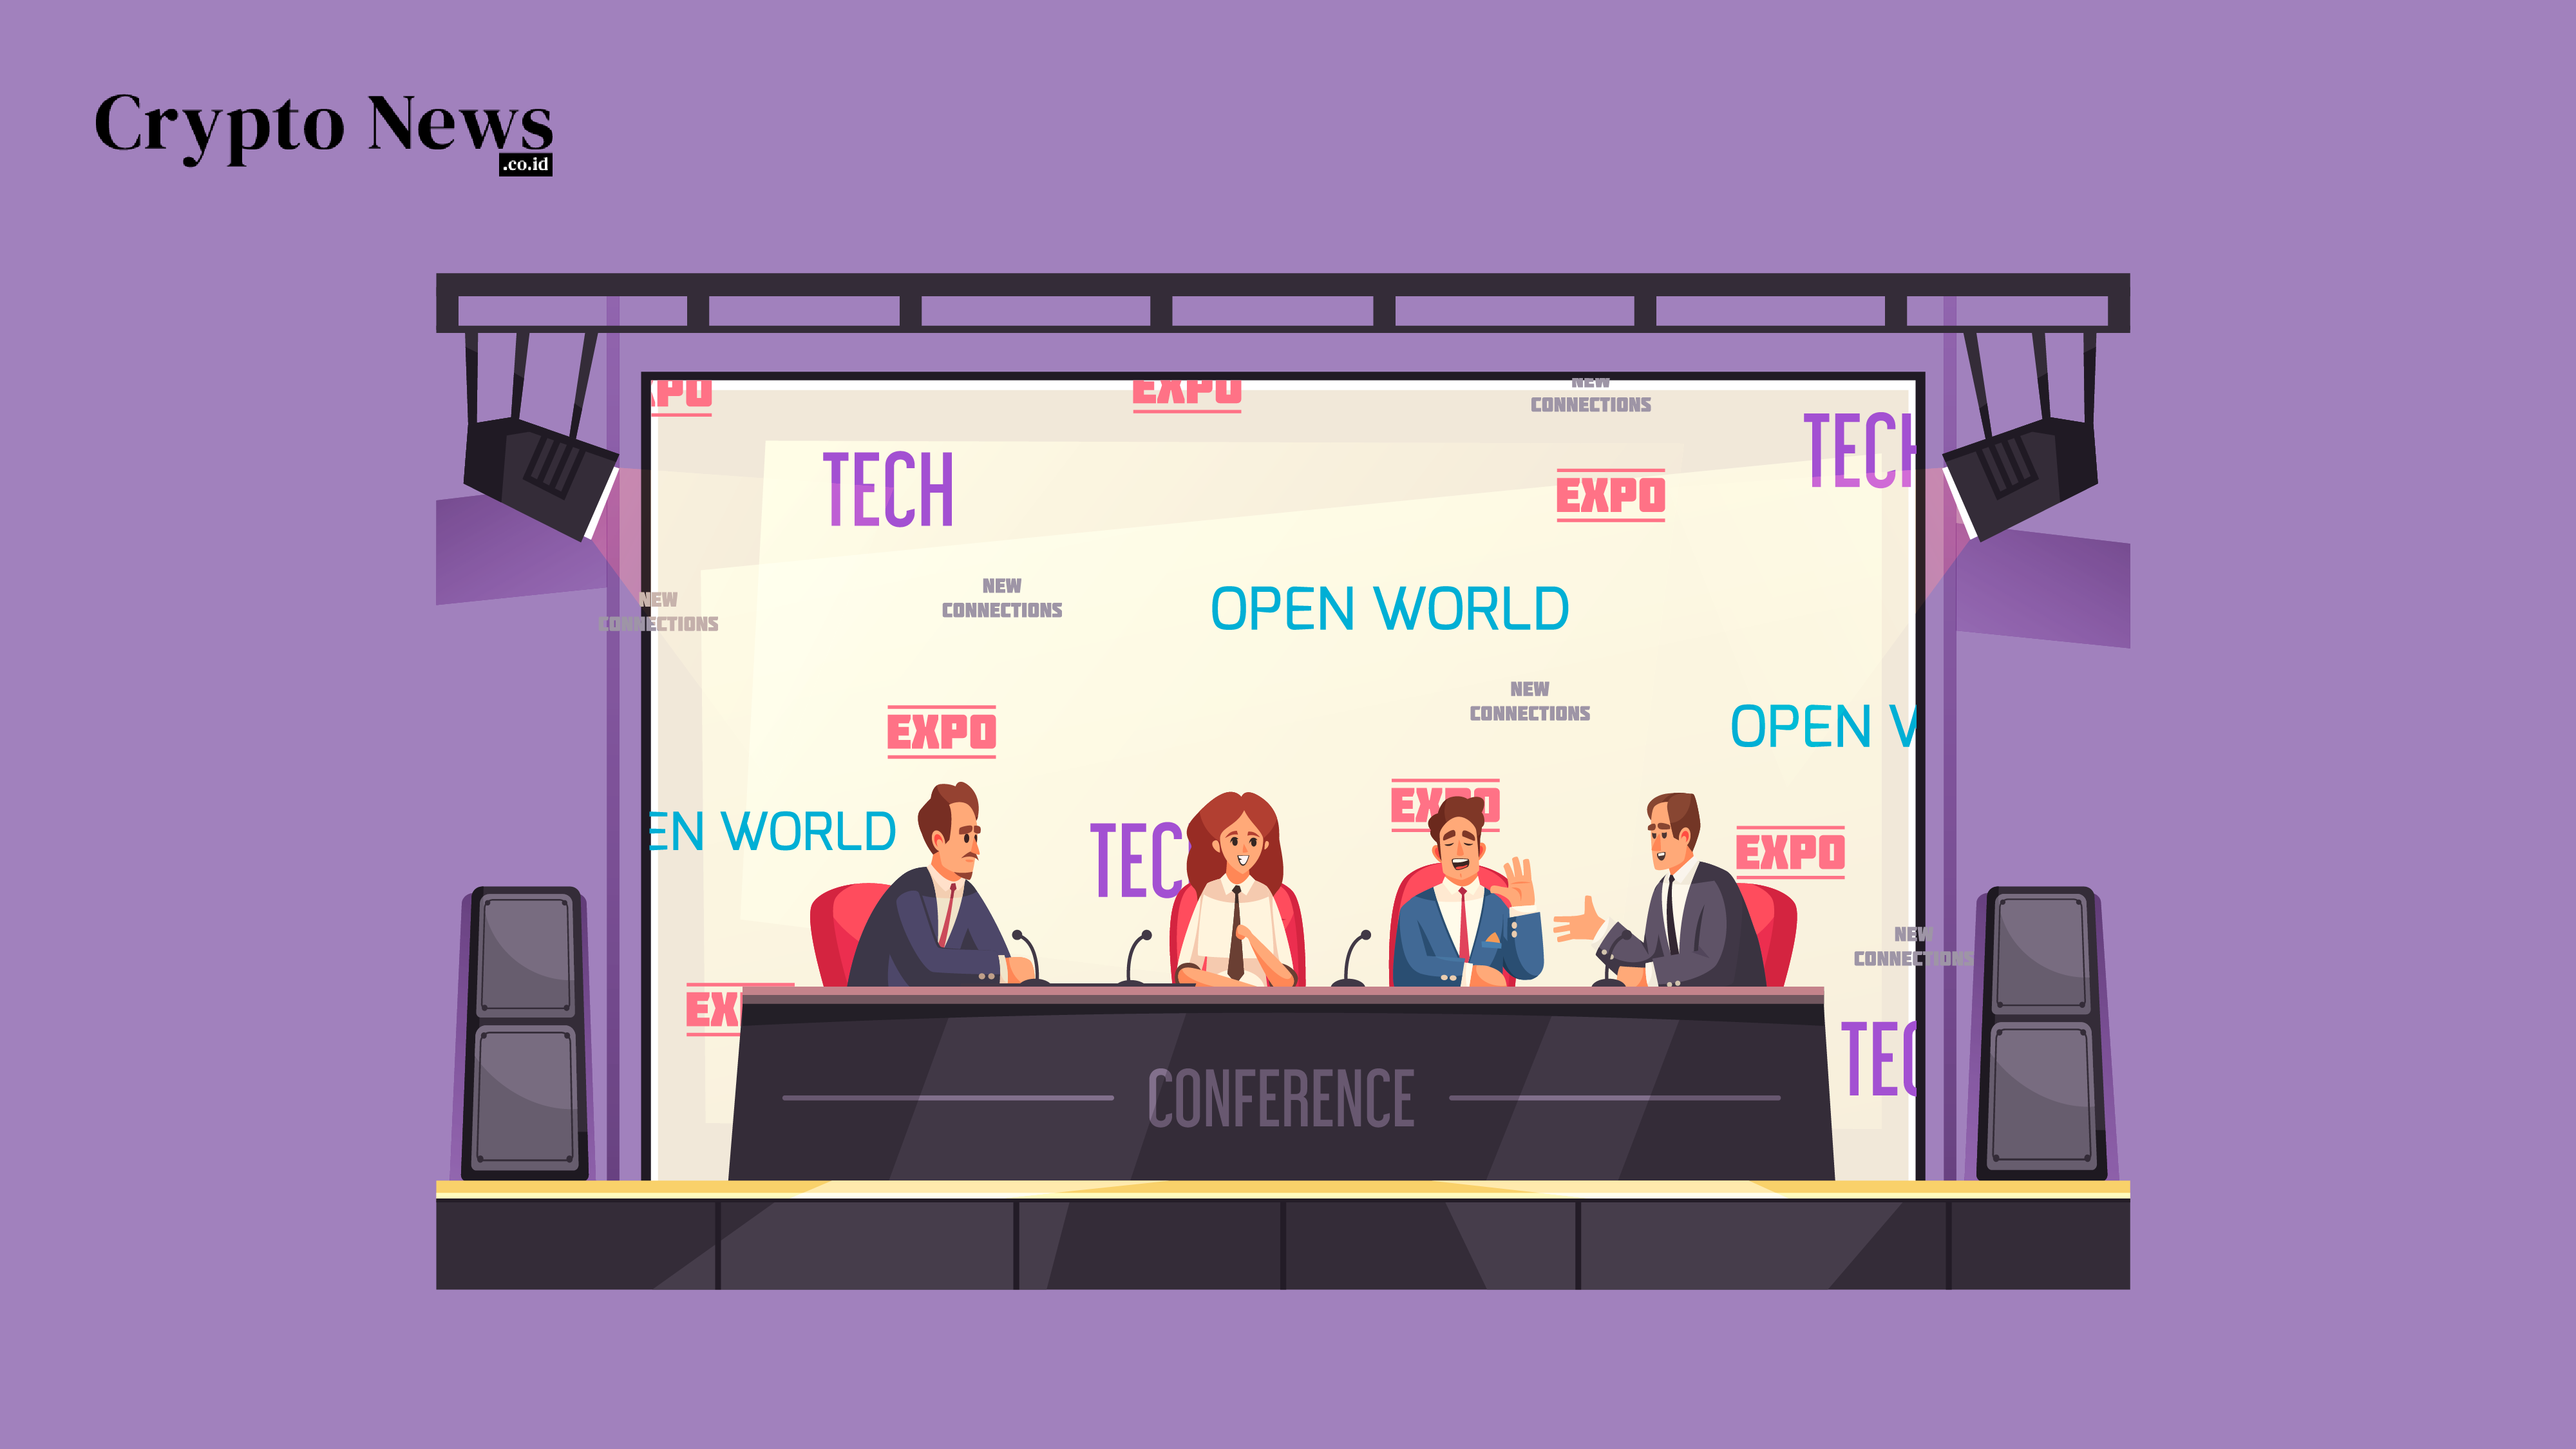 Illust - Polkadot Menyediakan Booth untuk Marketplace NFT dan Perusahaan Web 3.0 di Acara Web Summit 2022